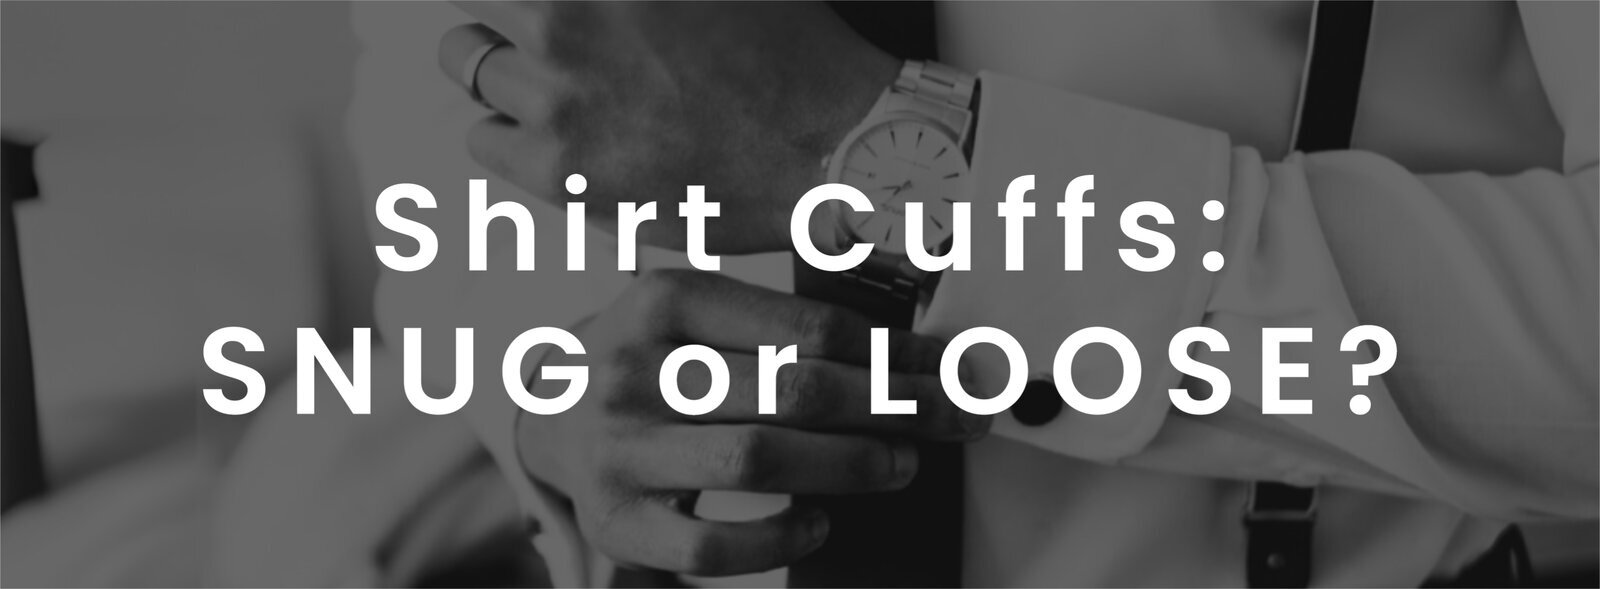 Should Shirt Cuffs Be Snug or Loose?